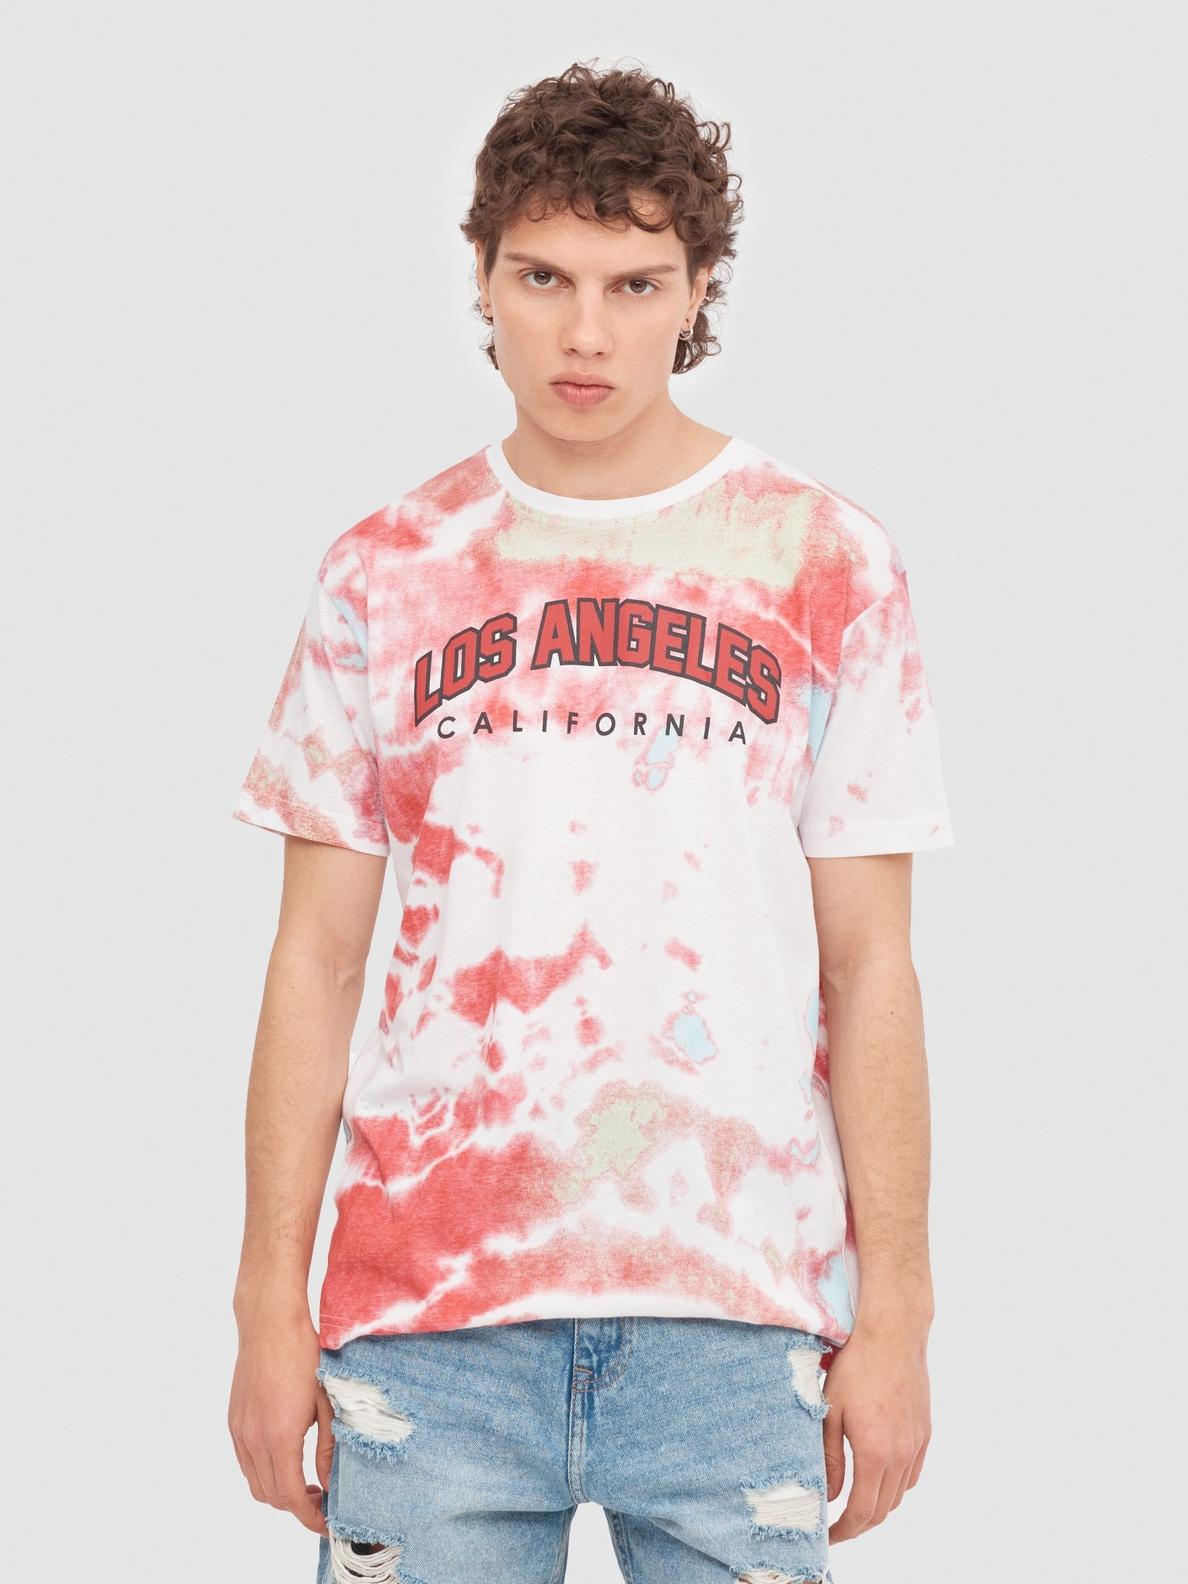 Oferta de Camiseta tie dye por 11,99€ en Inside